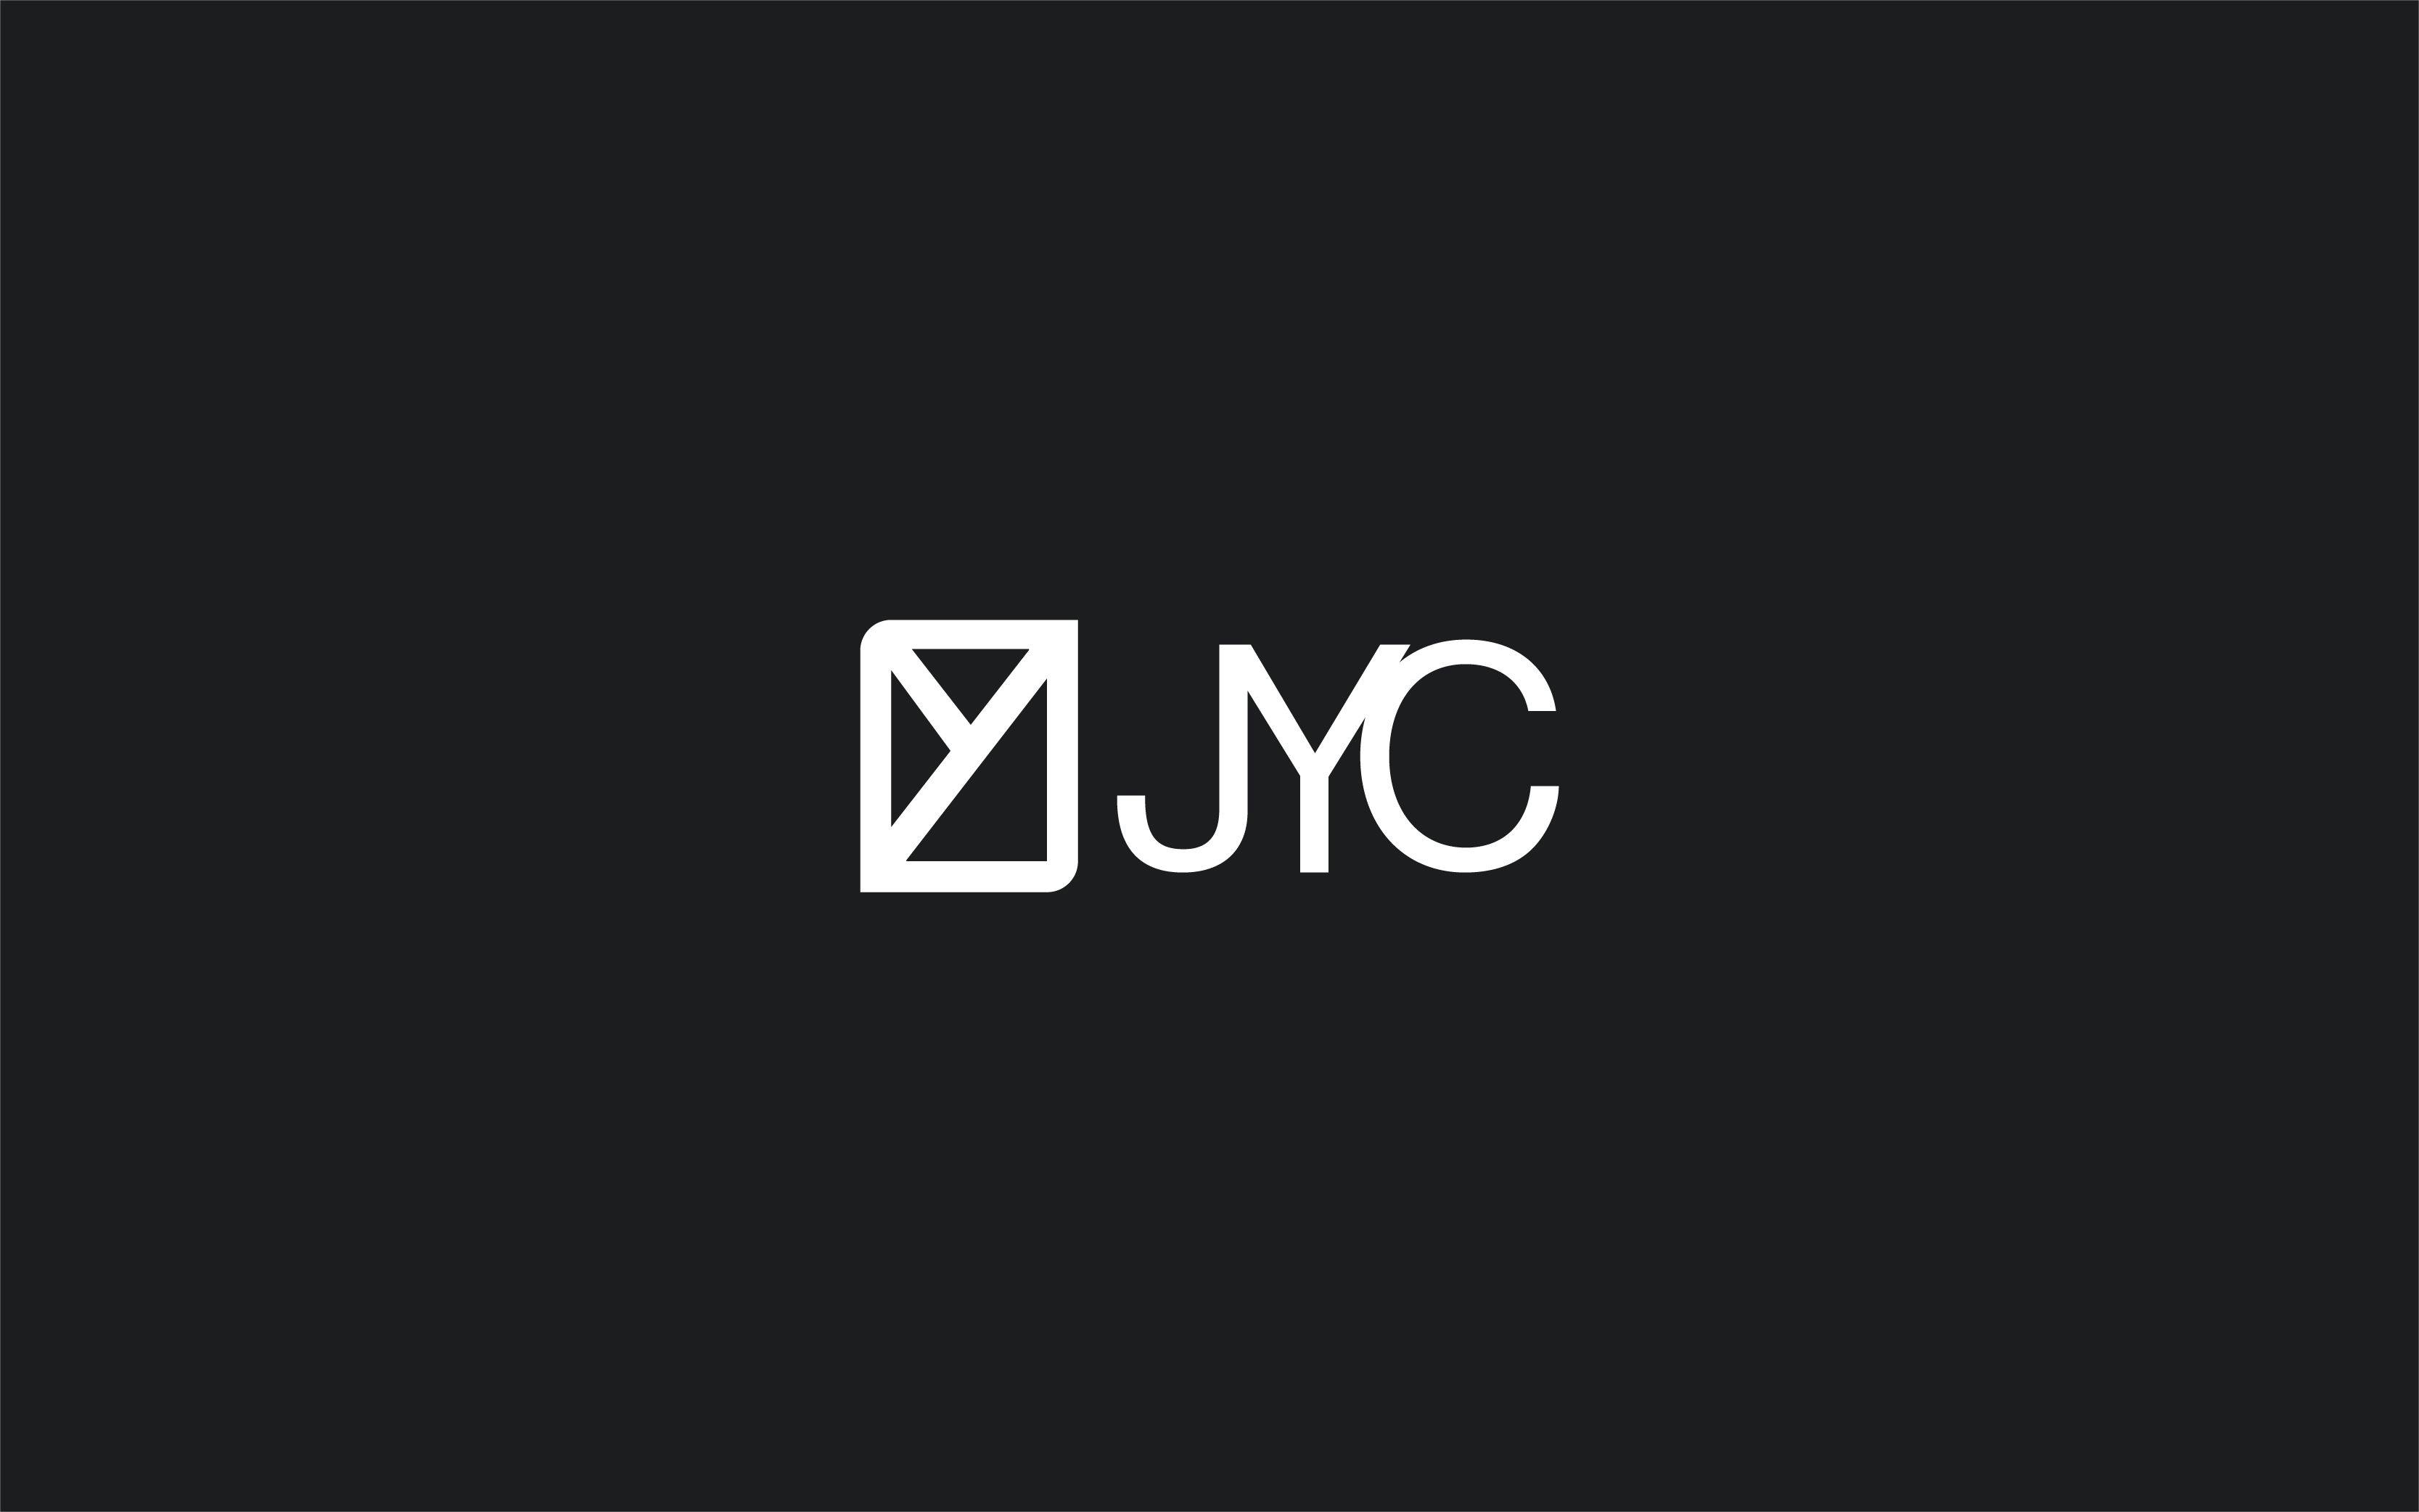 Web Design & Development - JYC